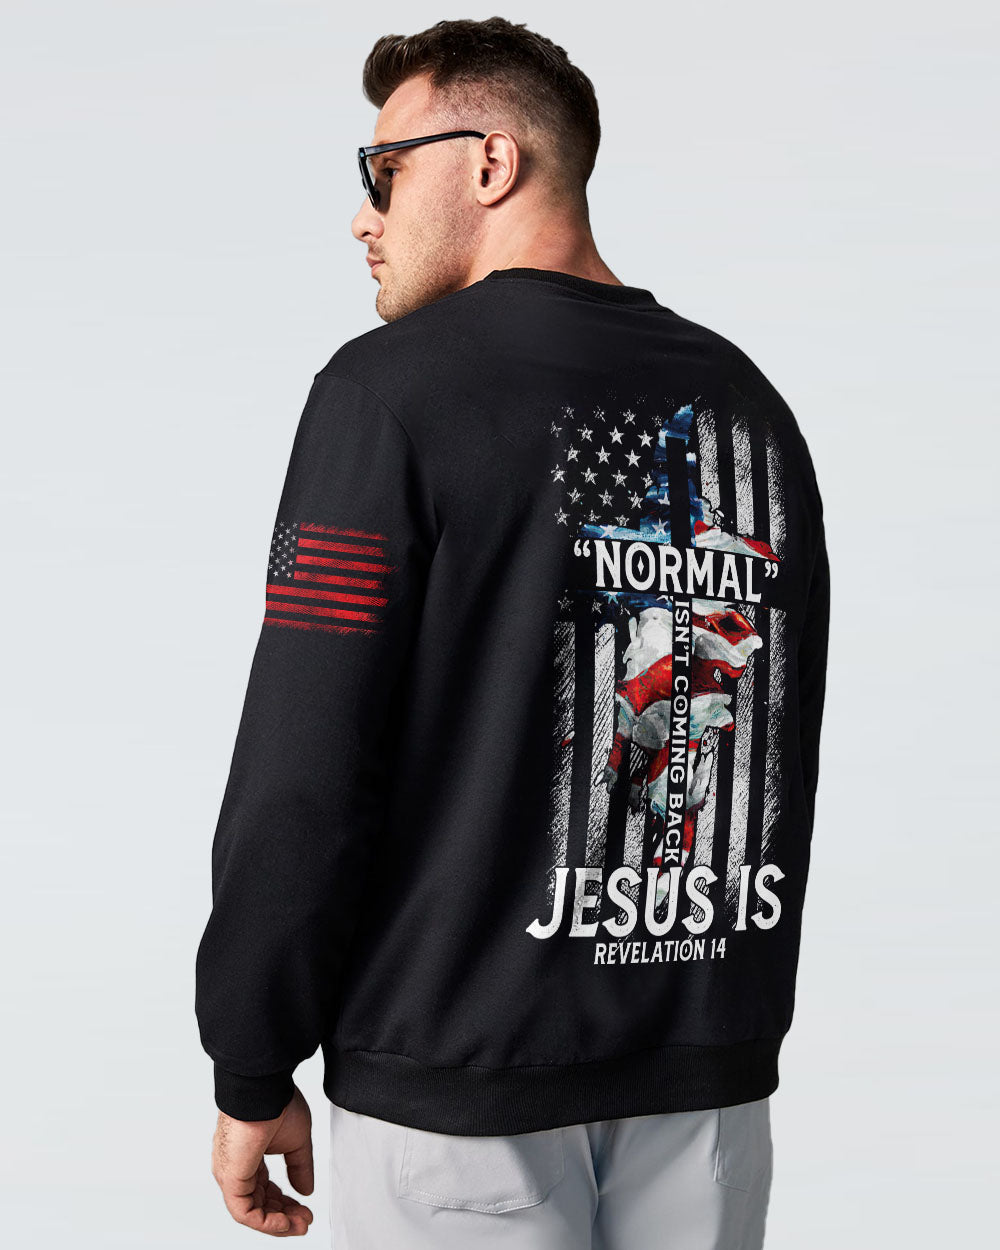 Normal Isn't Coming Back Men's Christian Sweatshirt